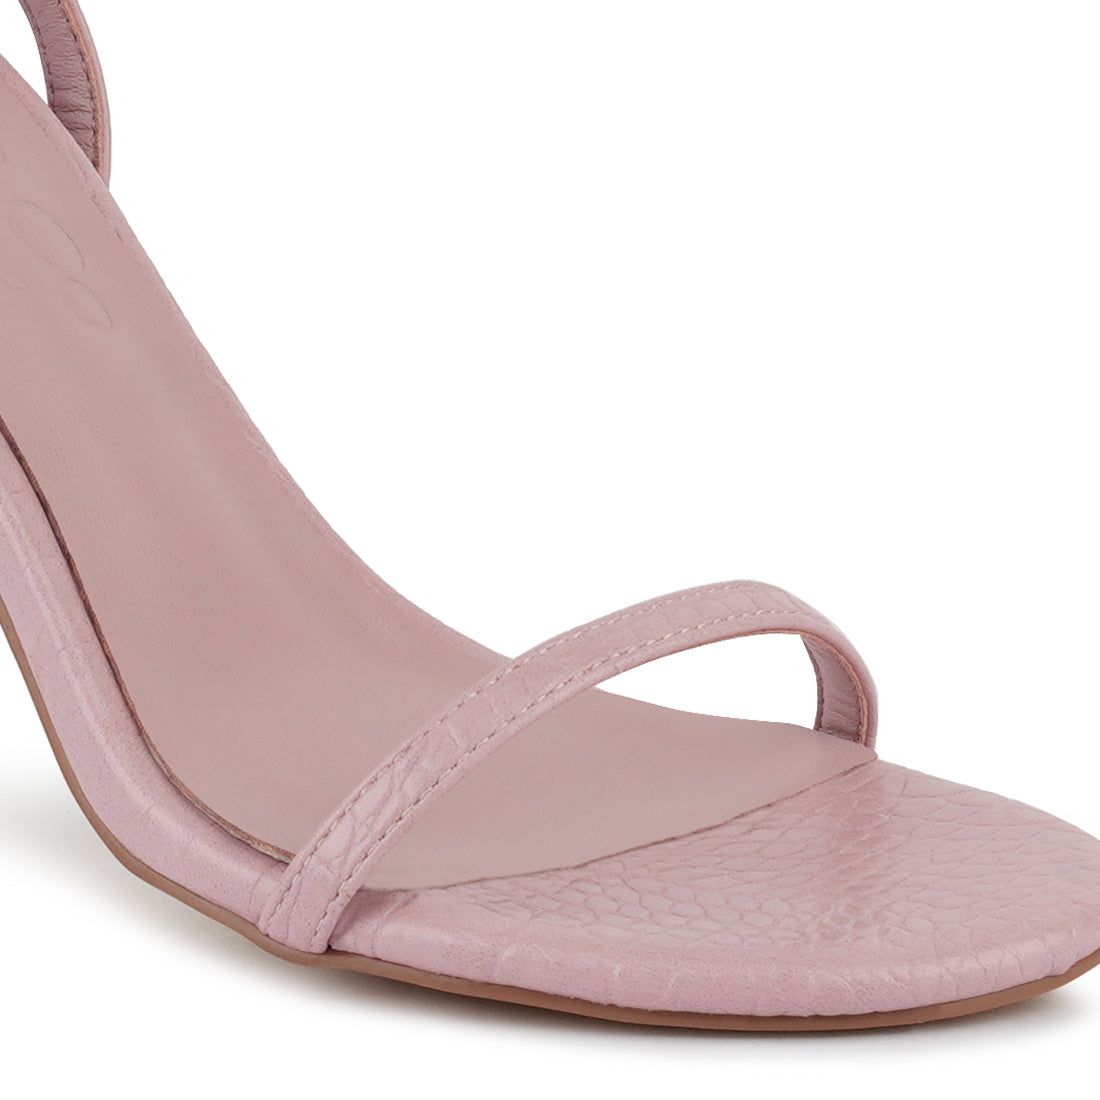 Pink White Croc High Heeled Sandal